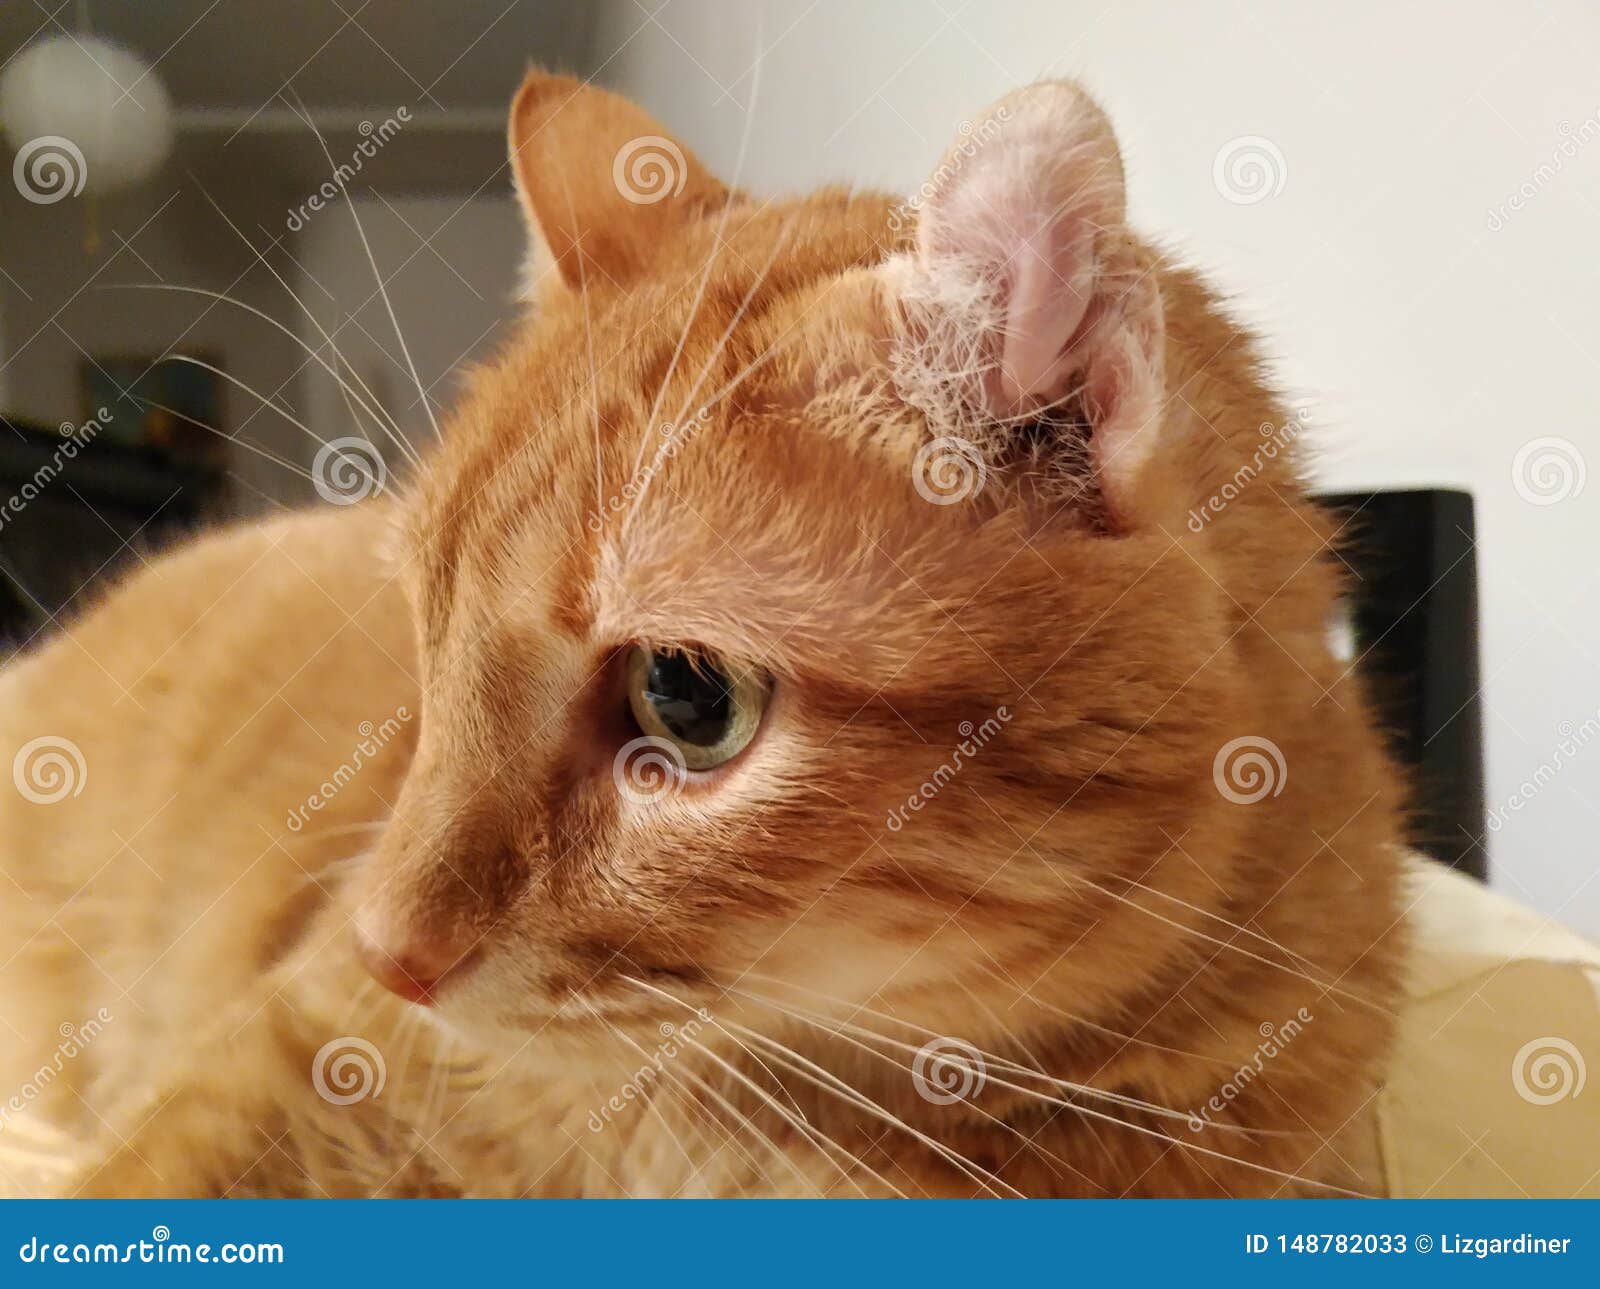 38 HQ Pictures Aural Hematoma Cat Treatment / Draining Cat Ear Hematoma